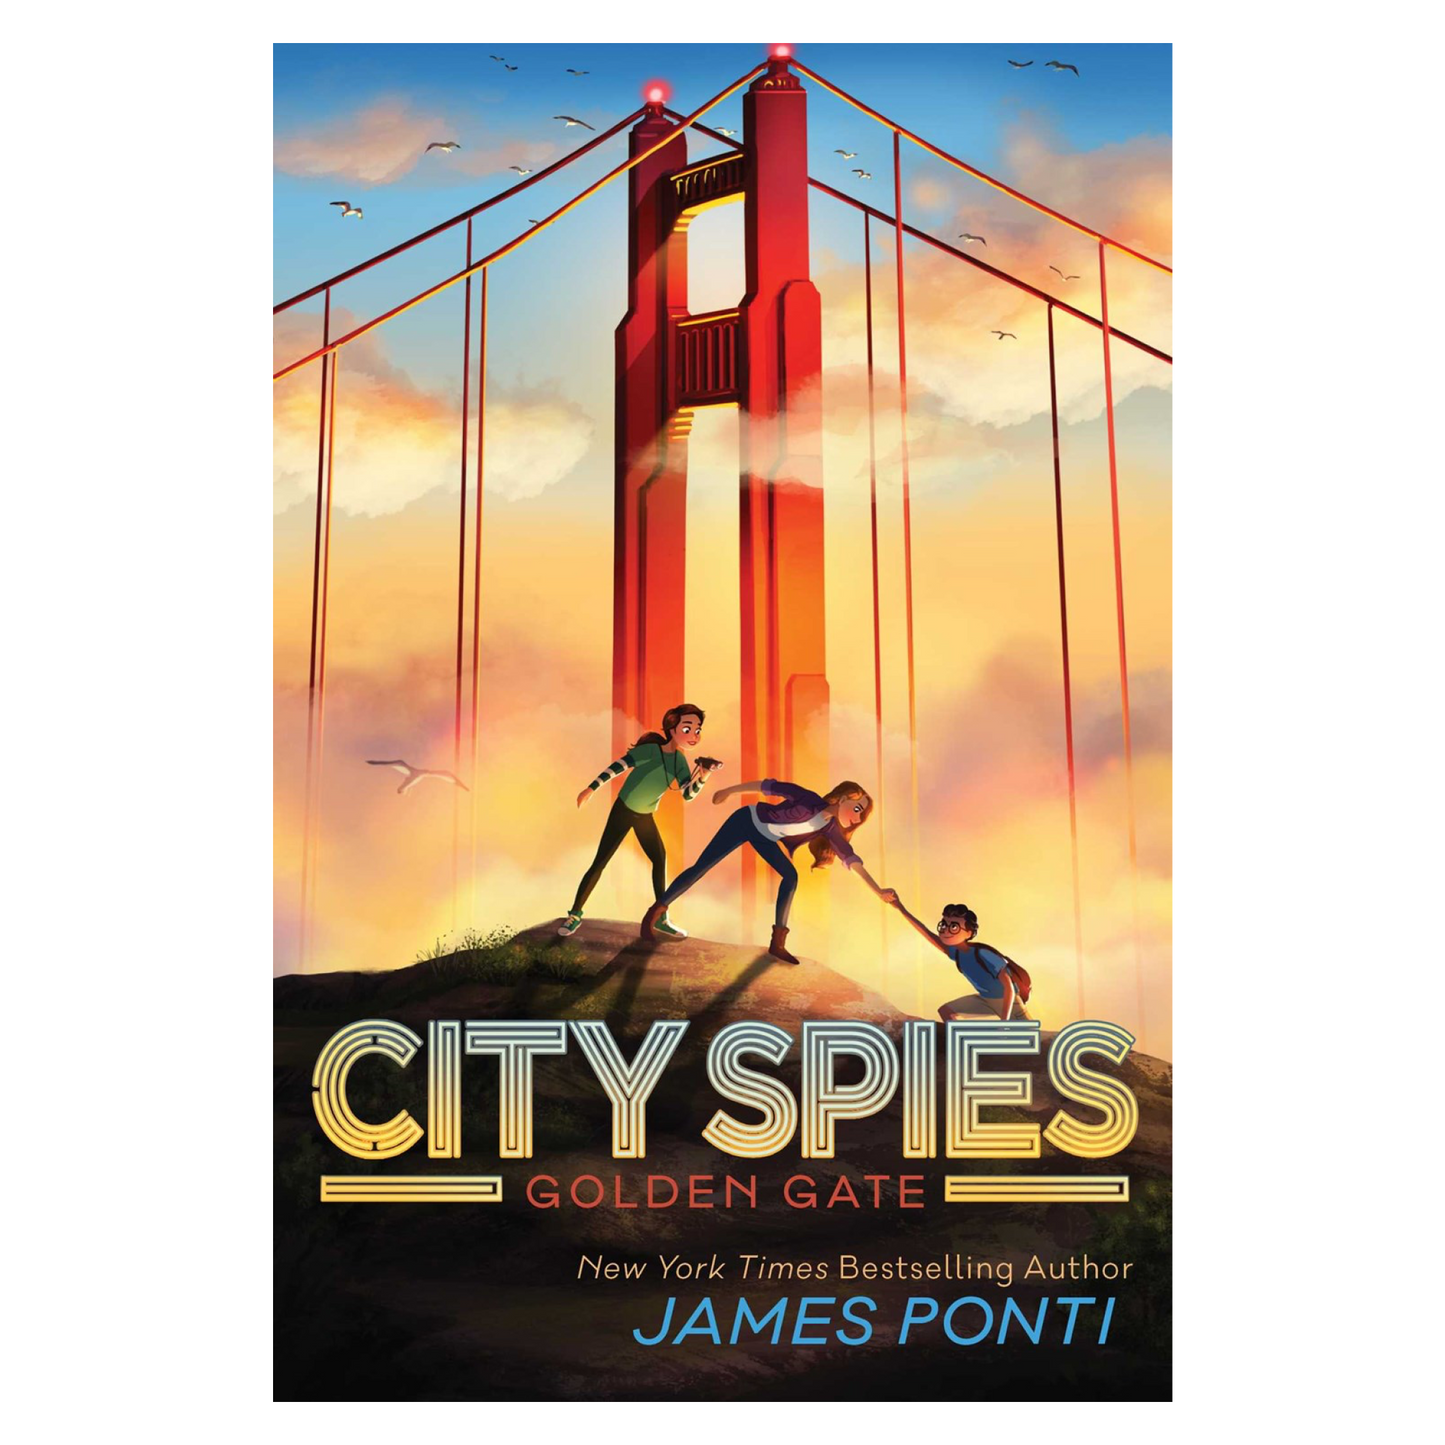 Golden Gate (City Spies #2)